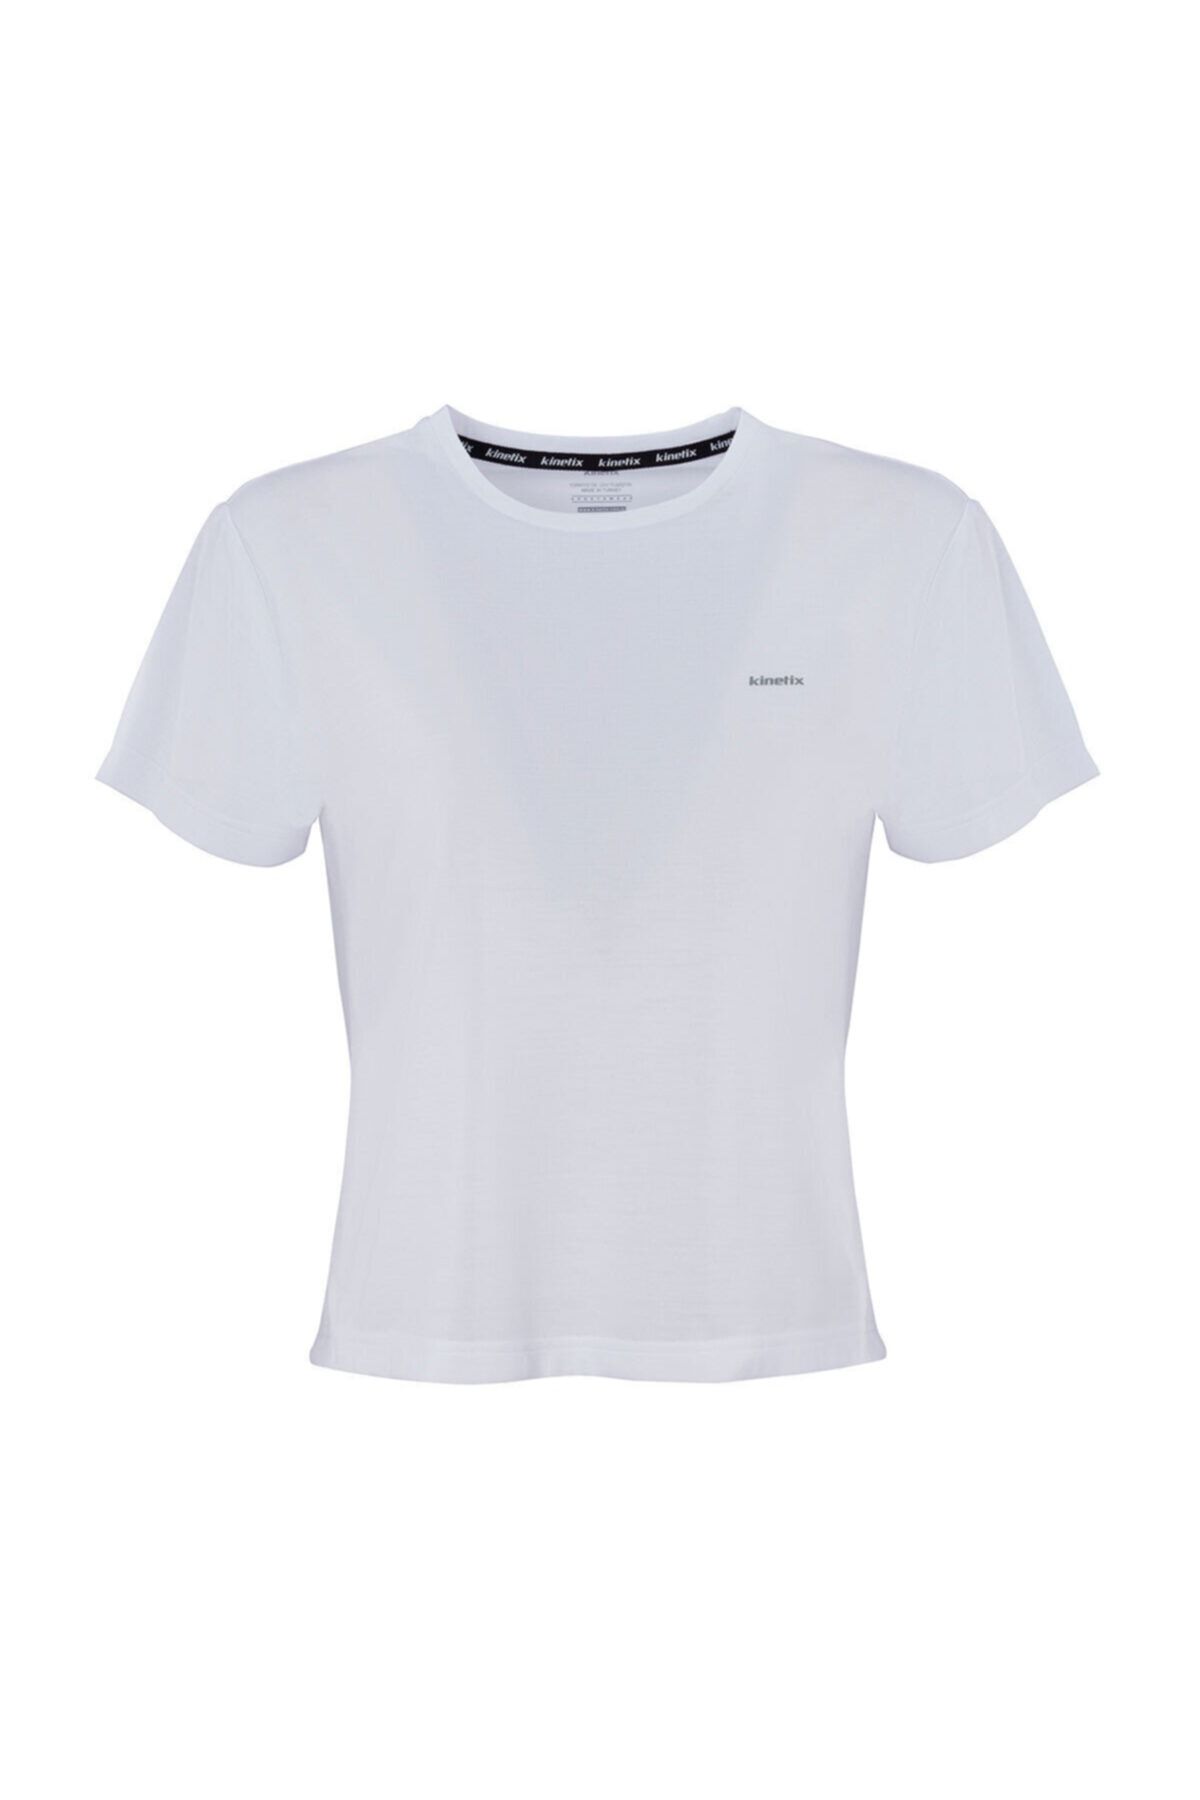 Kinetix SN235 BASIC CURVE T-SHIRT Beyaz Kadın T-Shirt 100581655